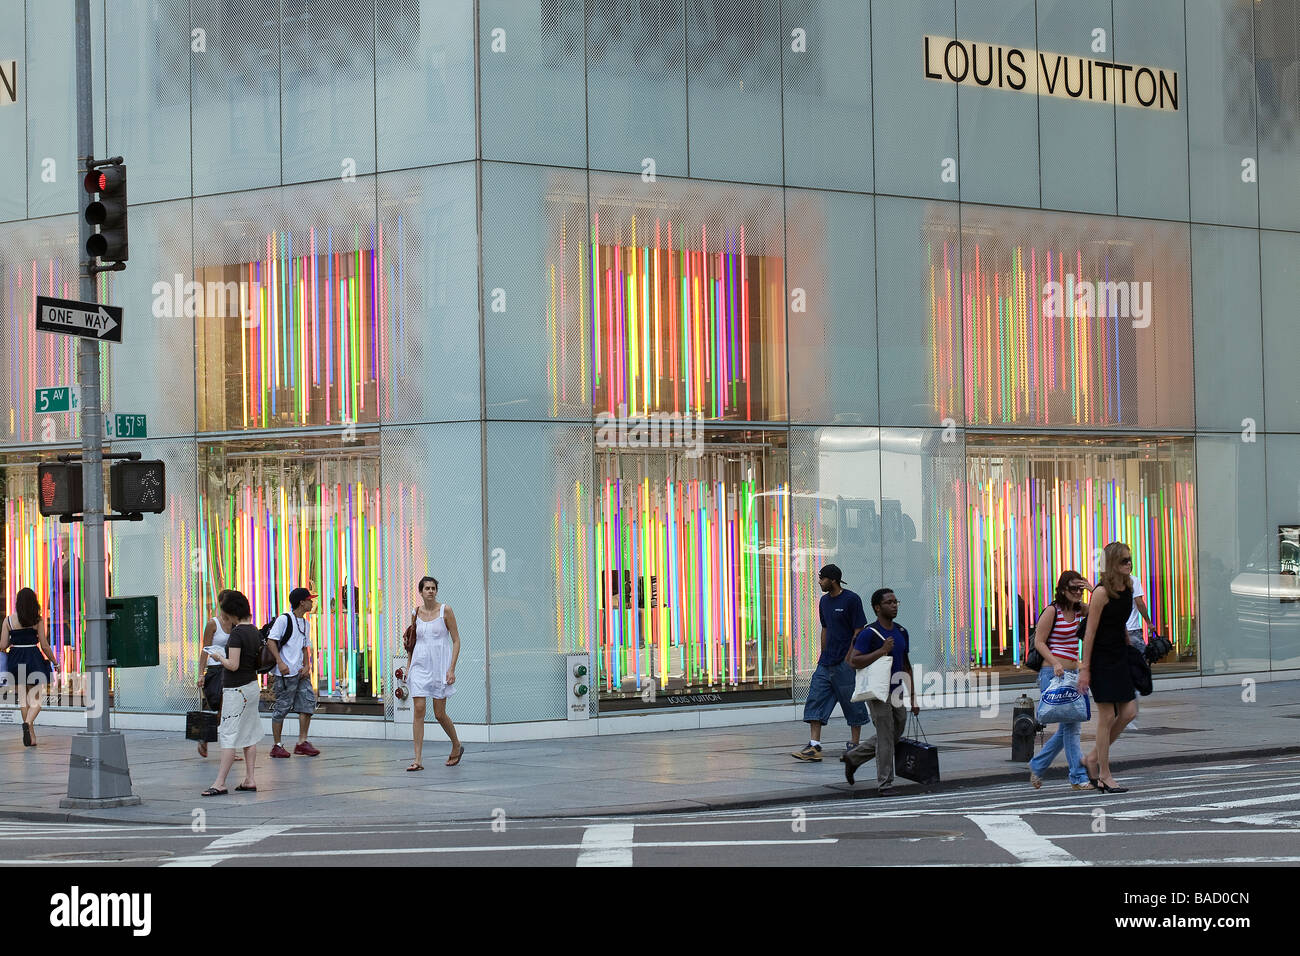 United States, New York city, Manhattan, 5th Avenue, Louis Vuitton Stock Photo, Royalty Free ...